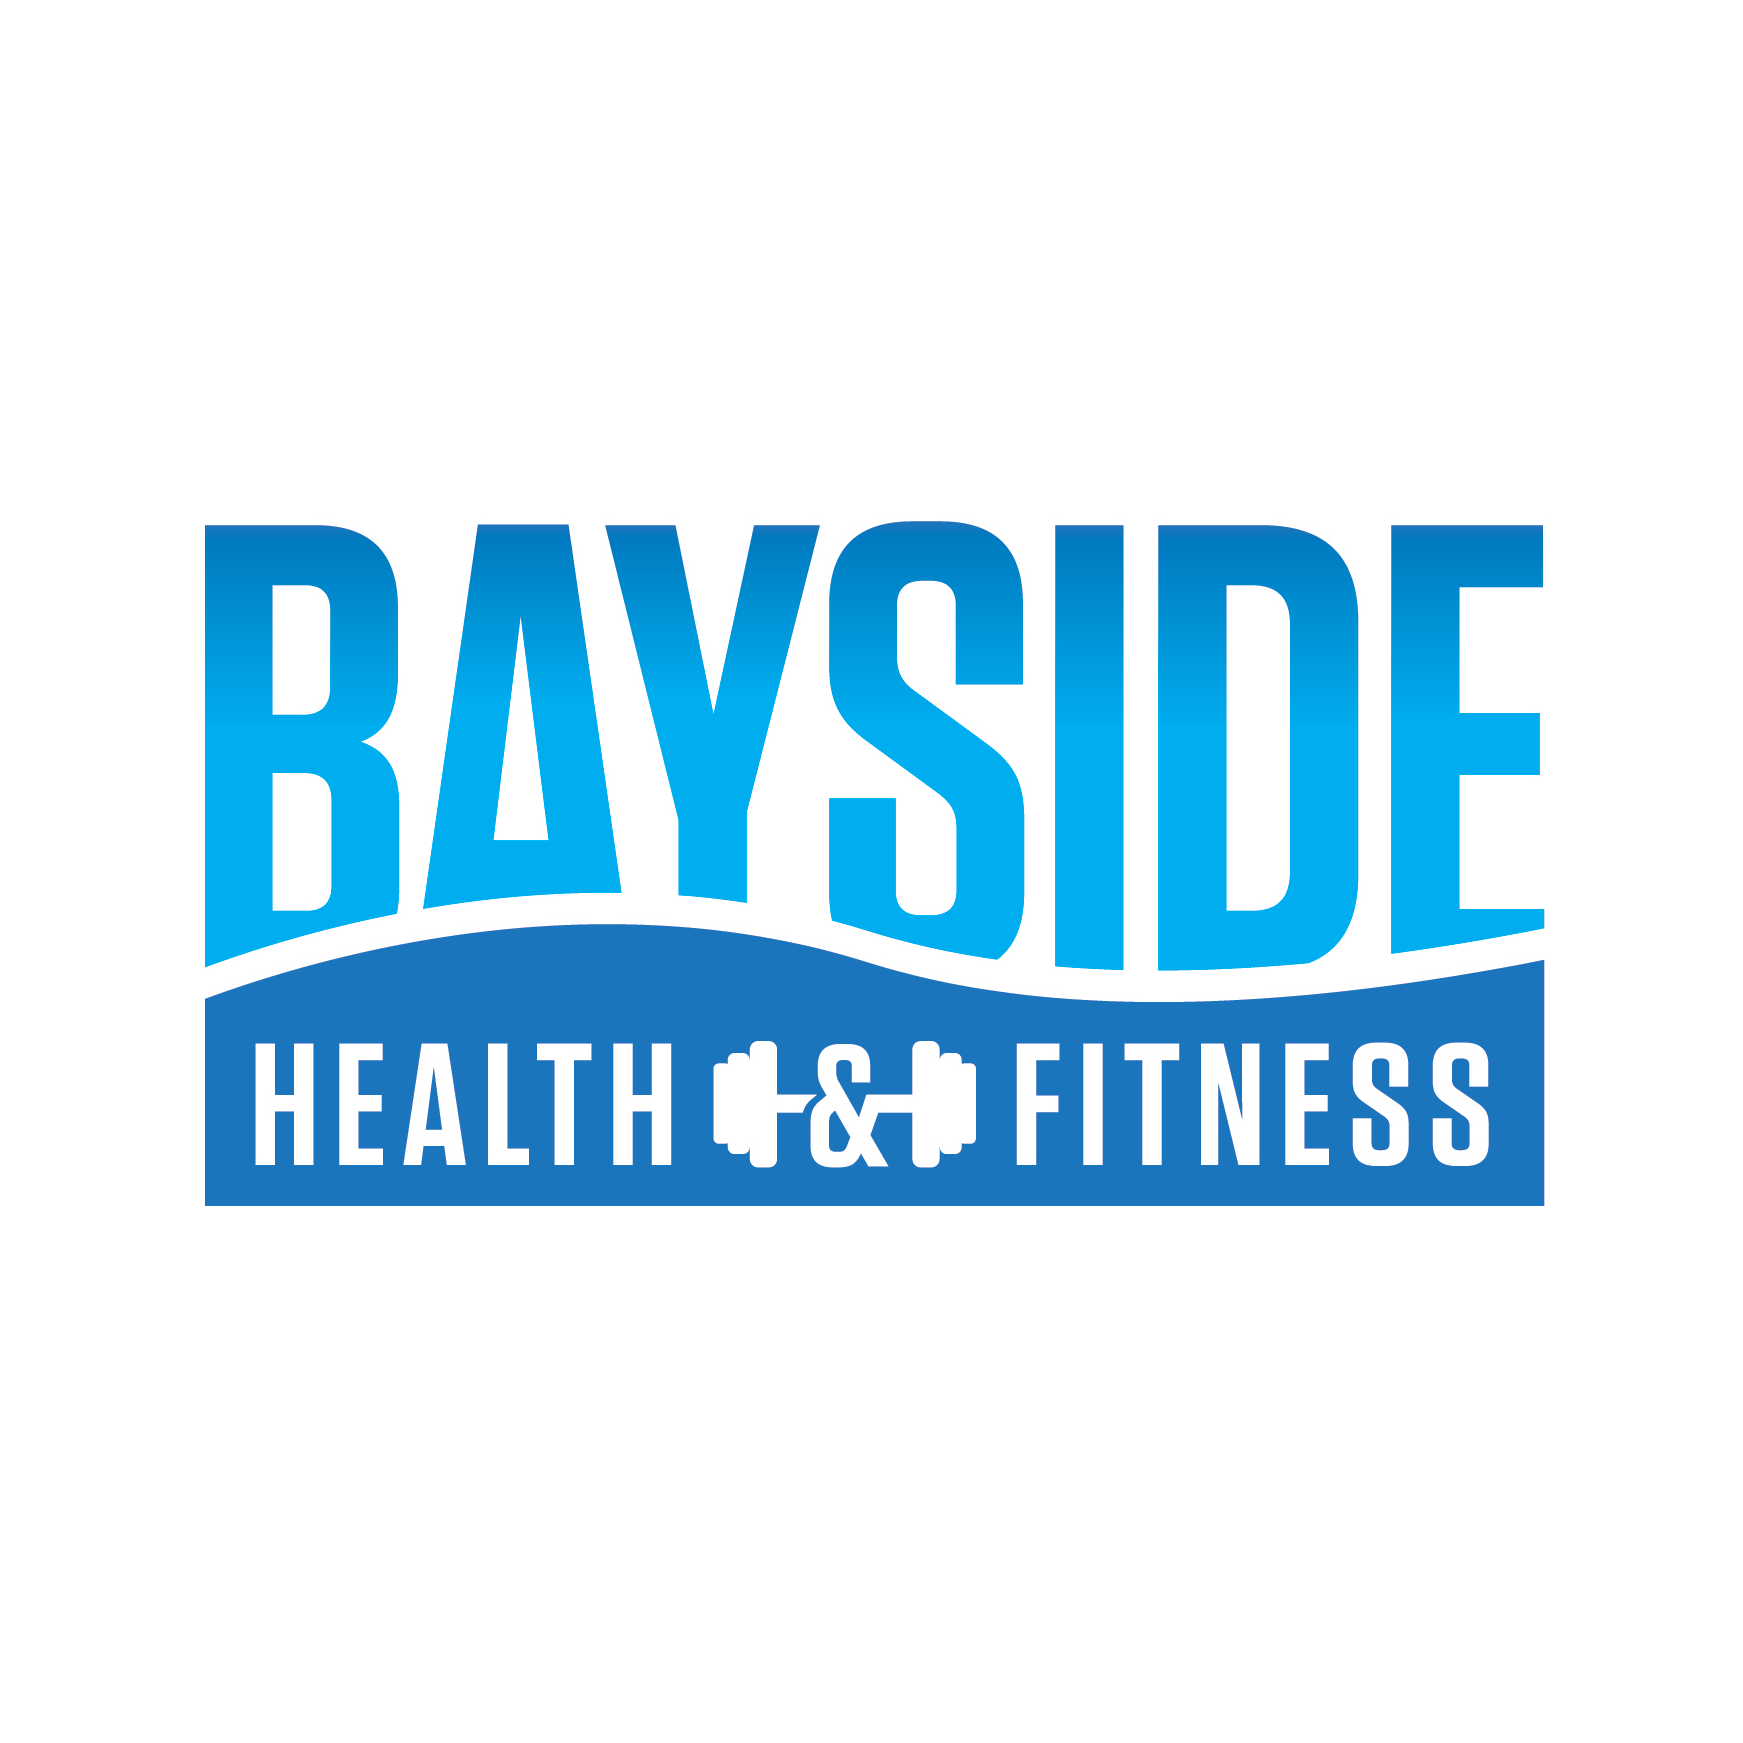 Bayside-Health-and-Fitness-Logo-white-bg